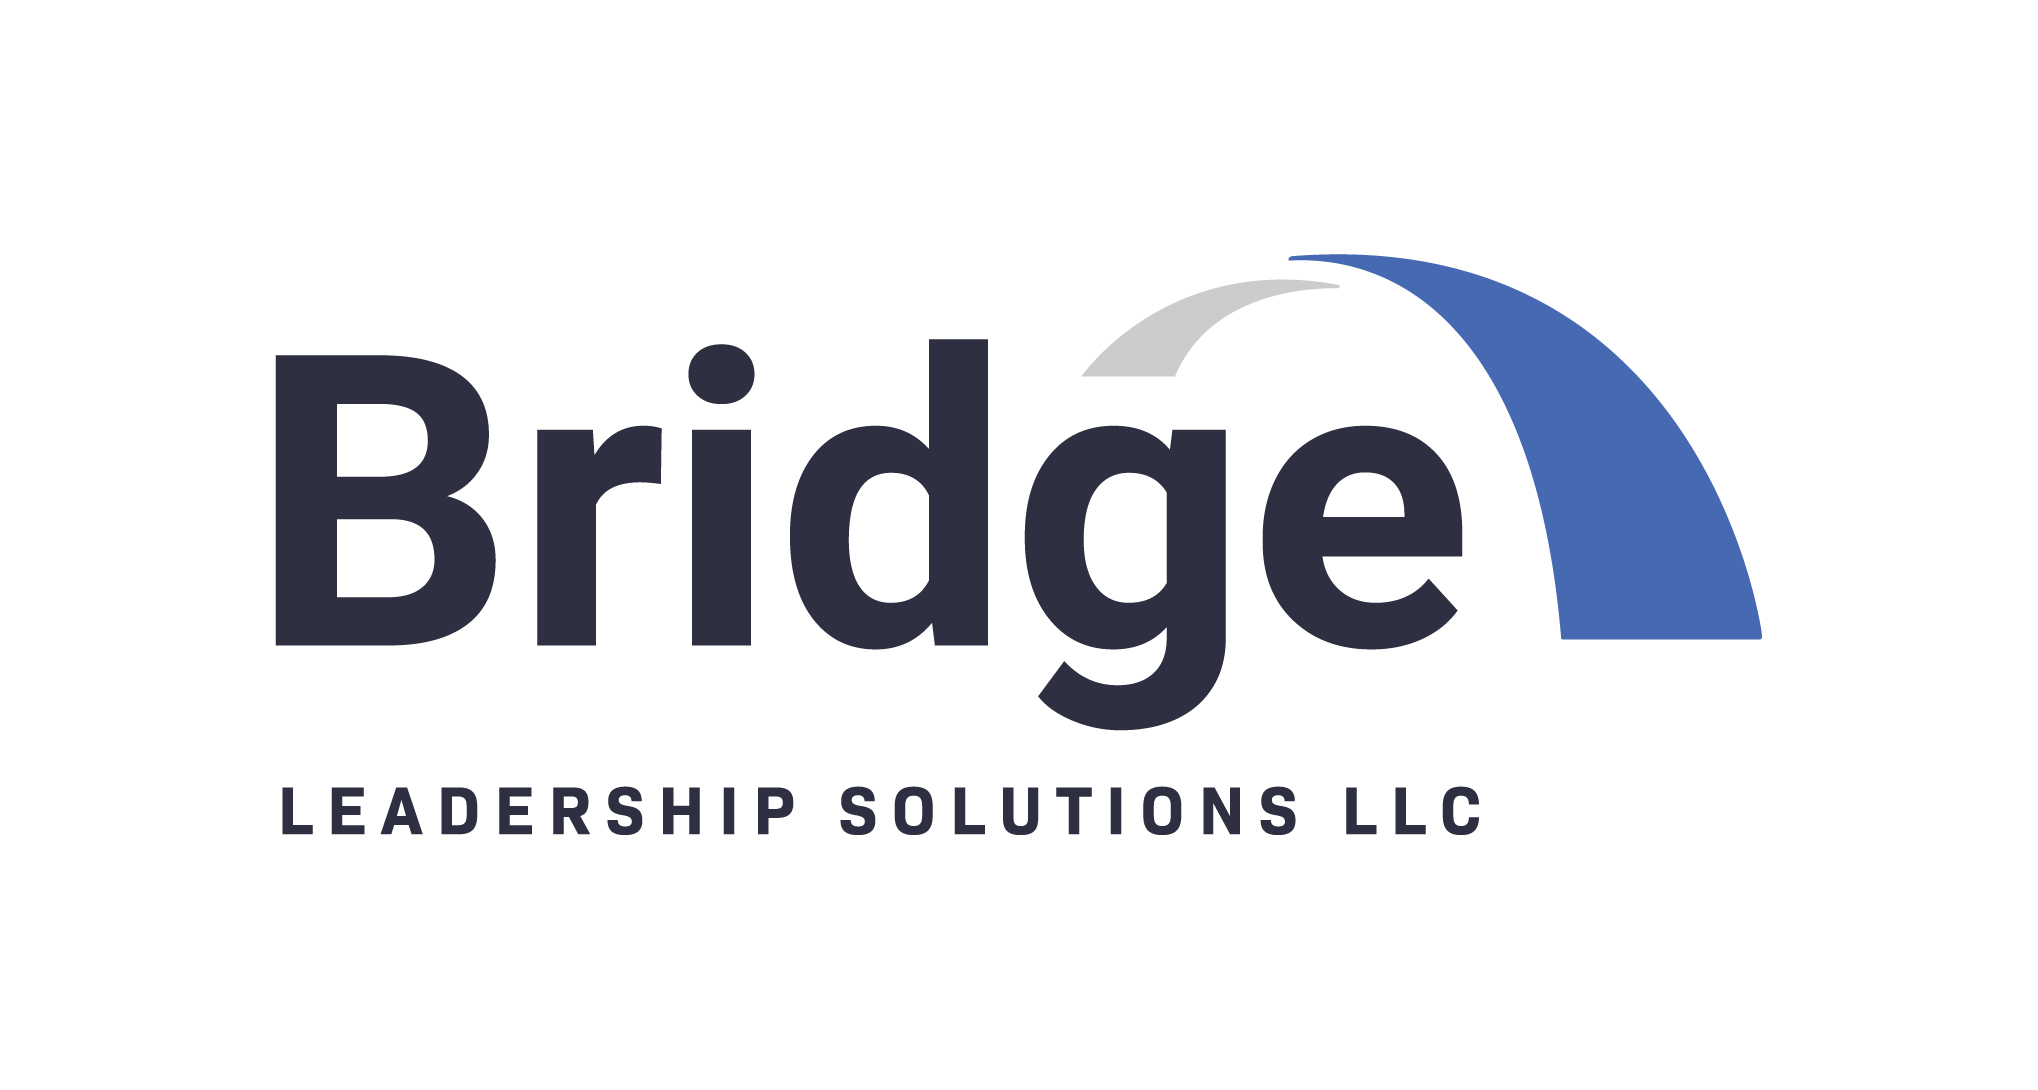 Bridge Leadership Solutions, LLC